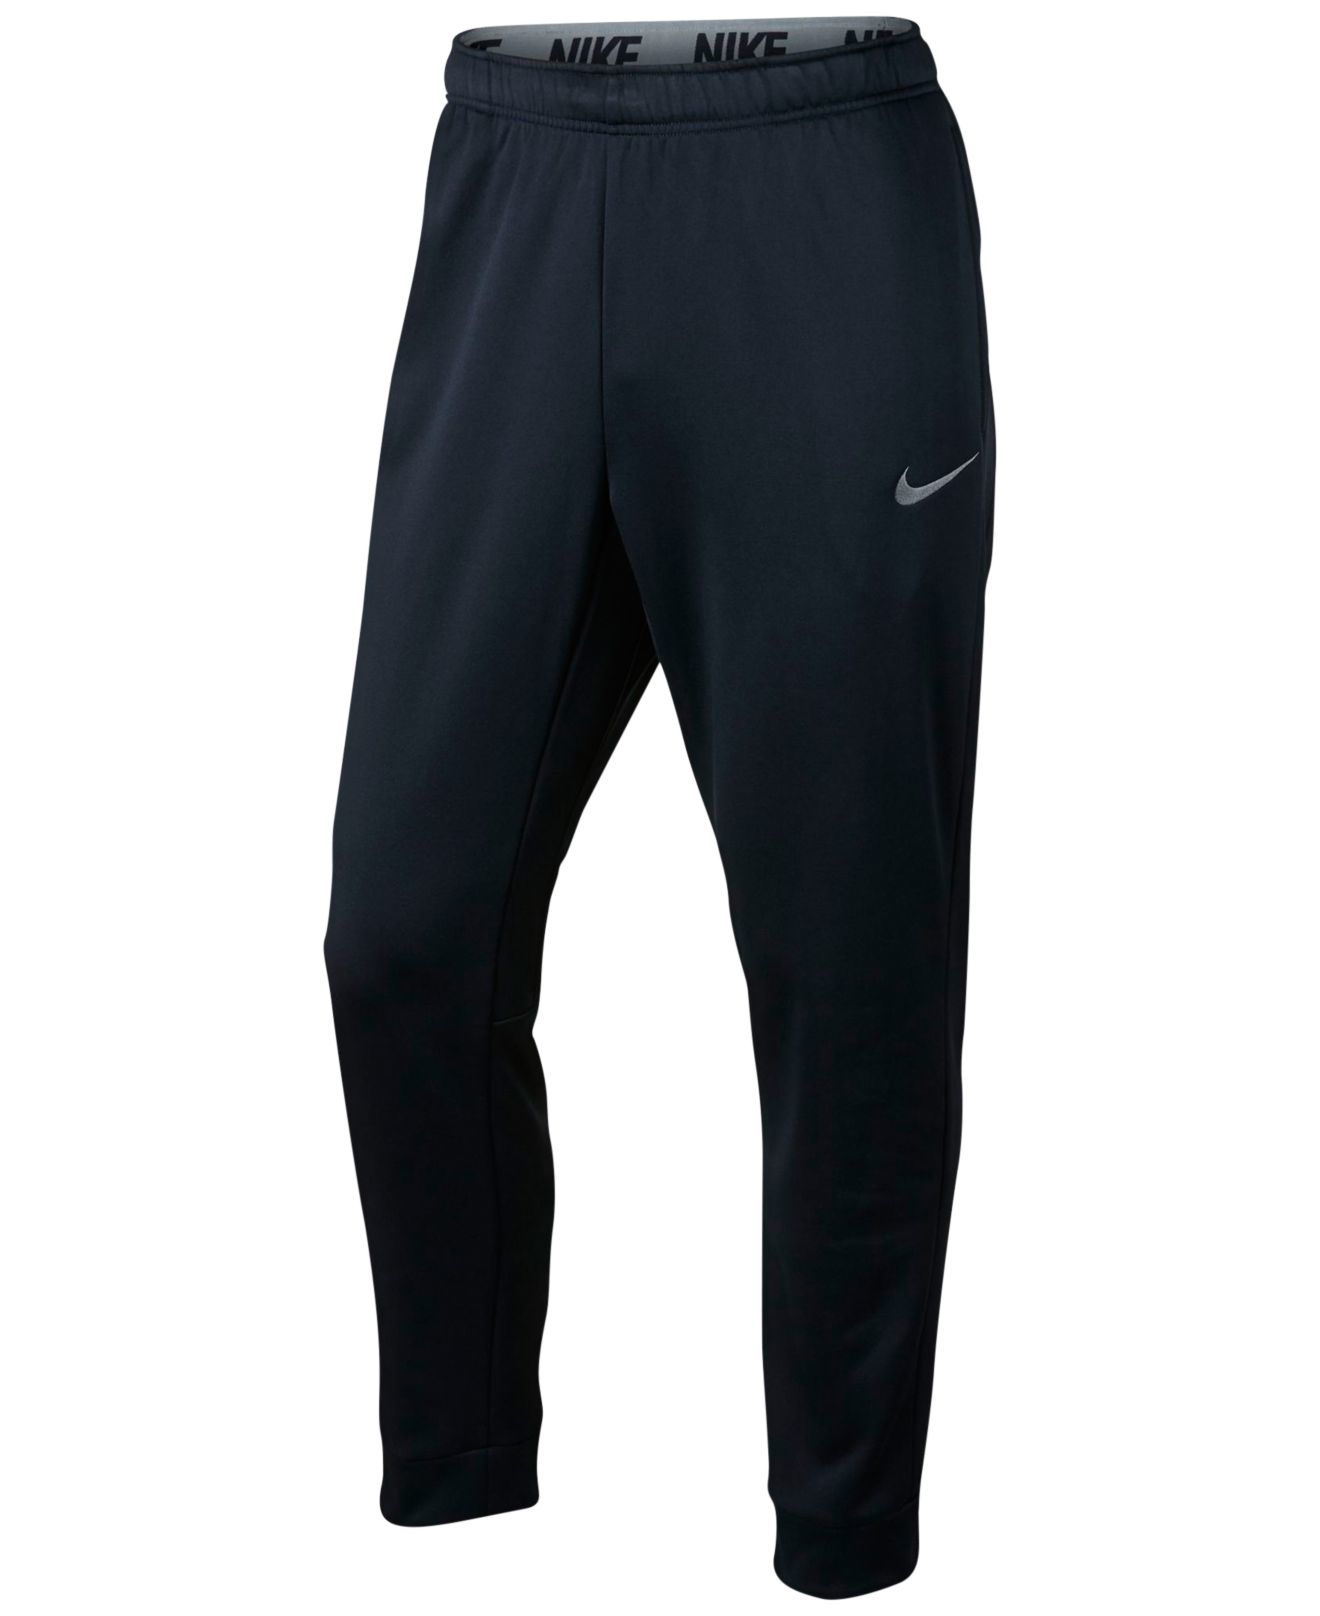 Lyst - Nike Men's Ko Slacker Therma-fit Training Joggers in Blue for Men